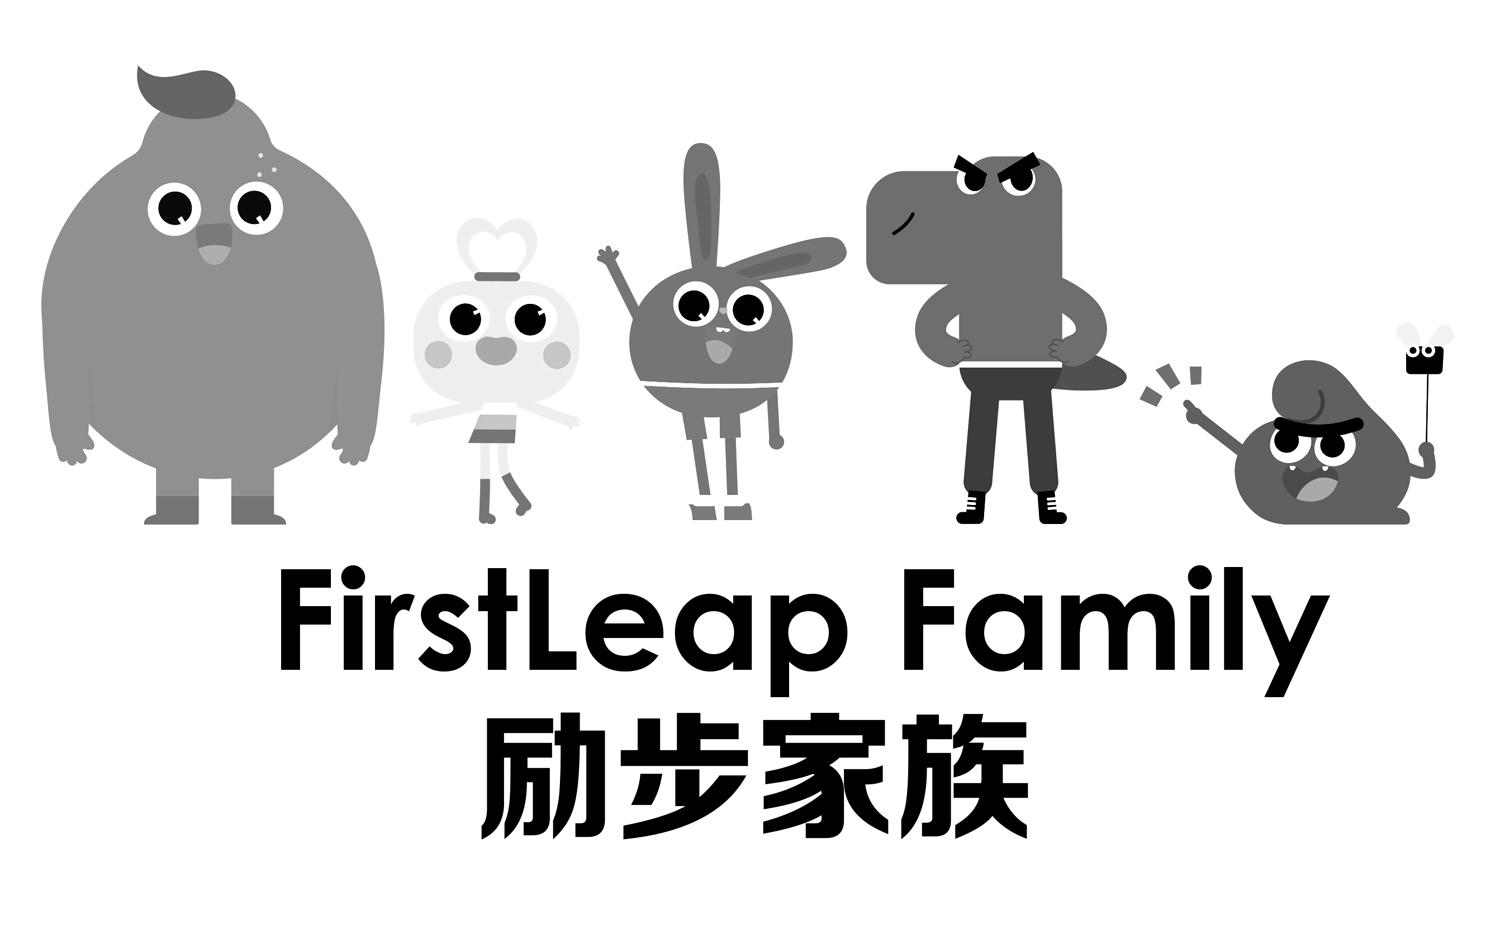 励步家族 firstleap family                 